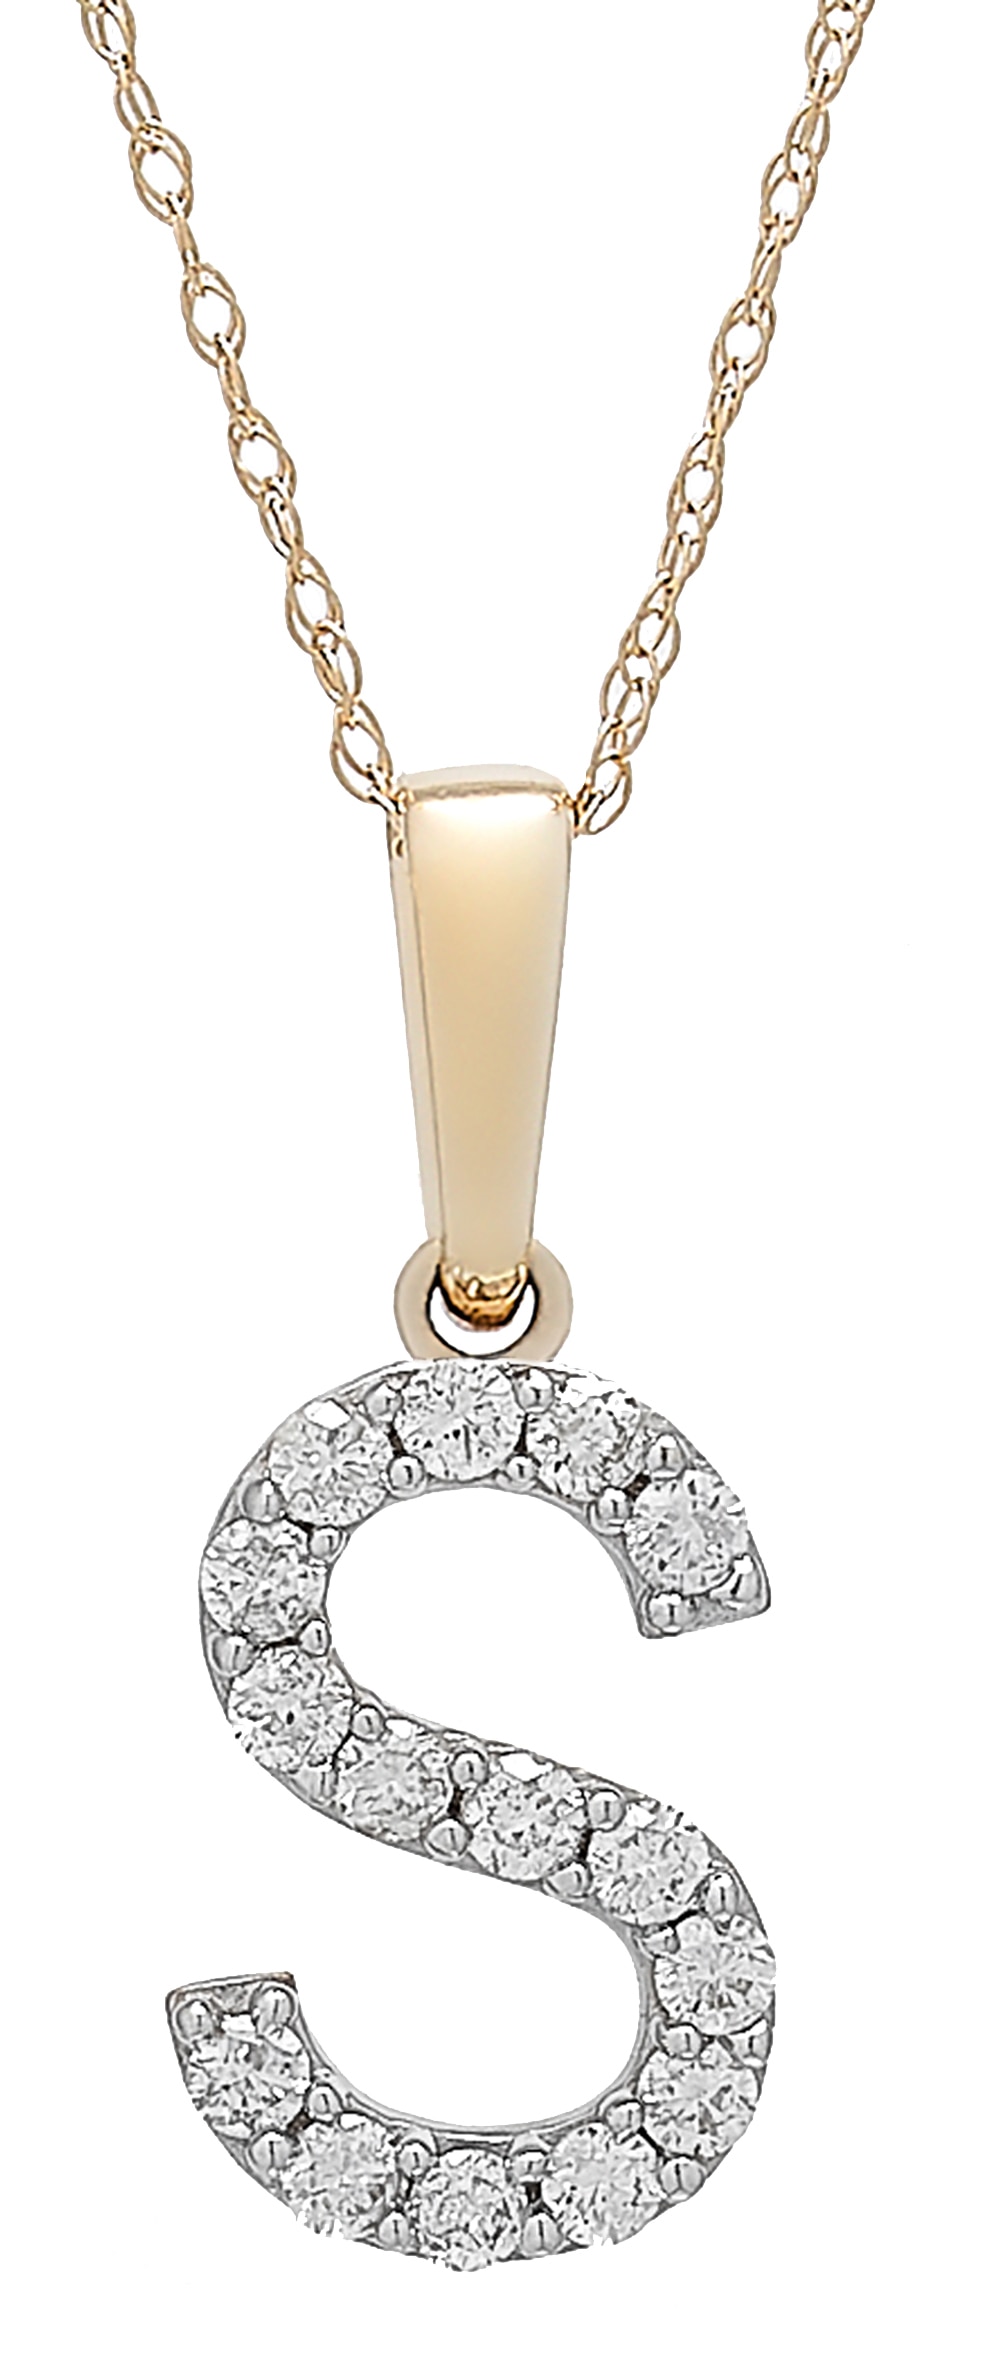 Jewellery - Necklaces & Pendants - Pendant Necklaces - 14K White